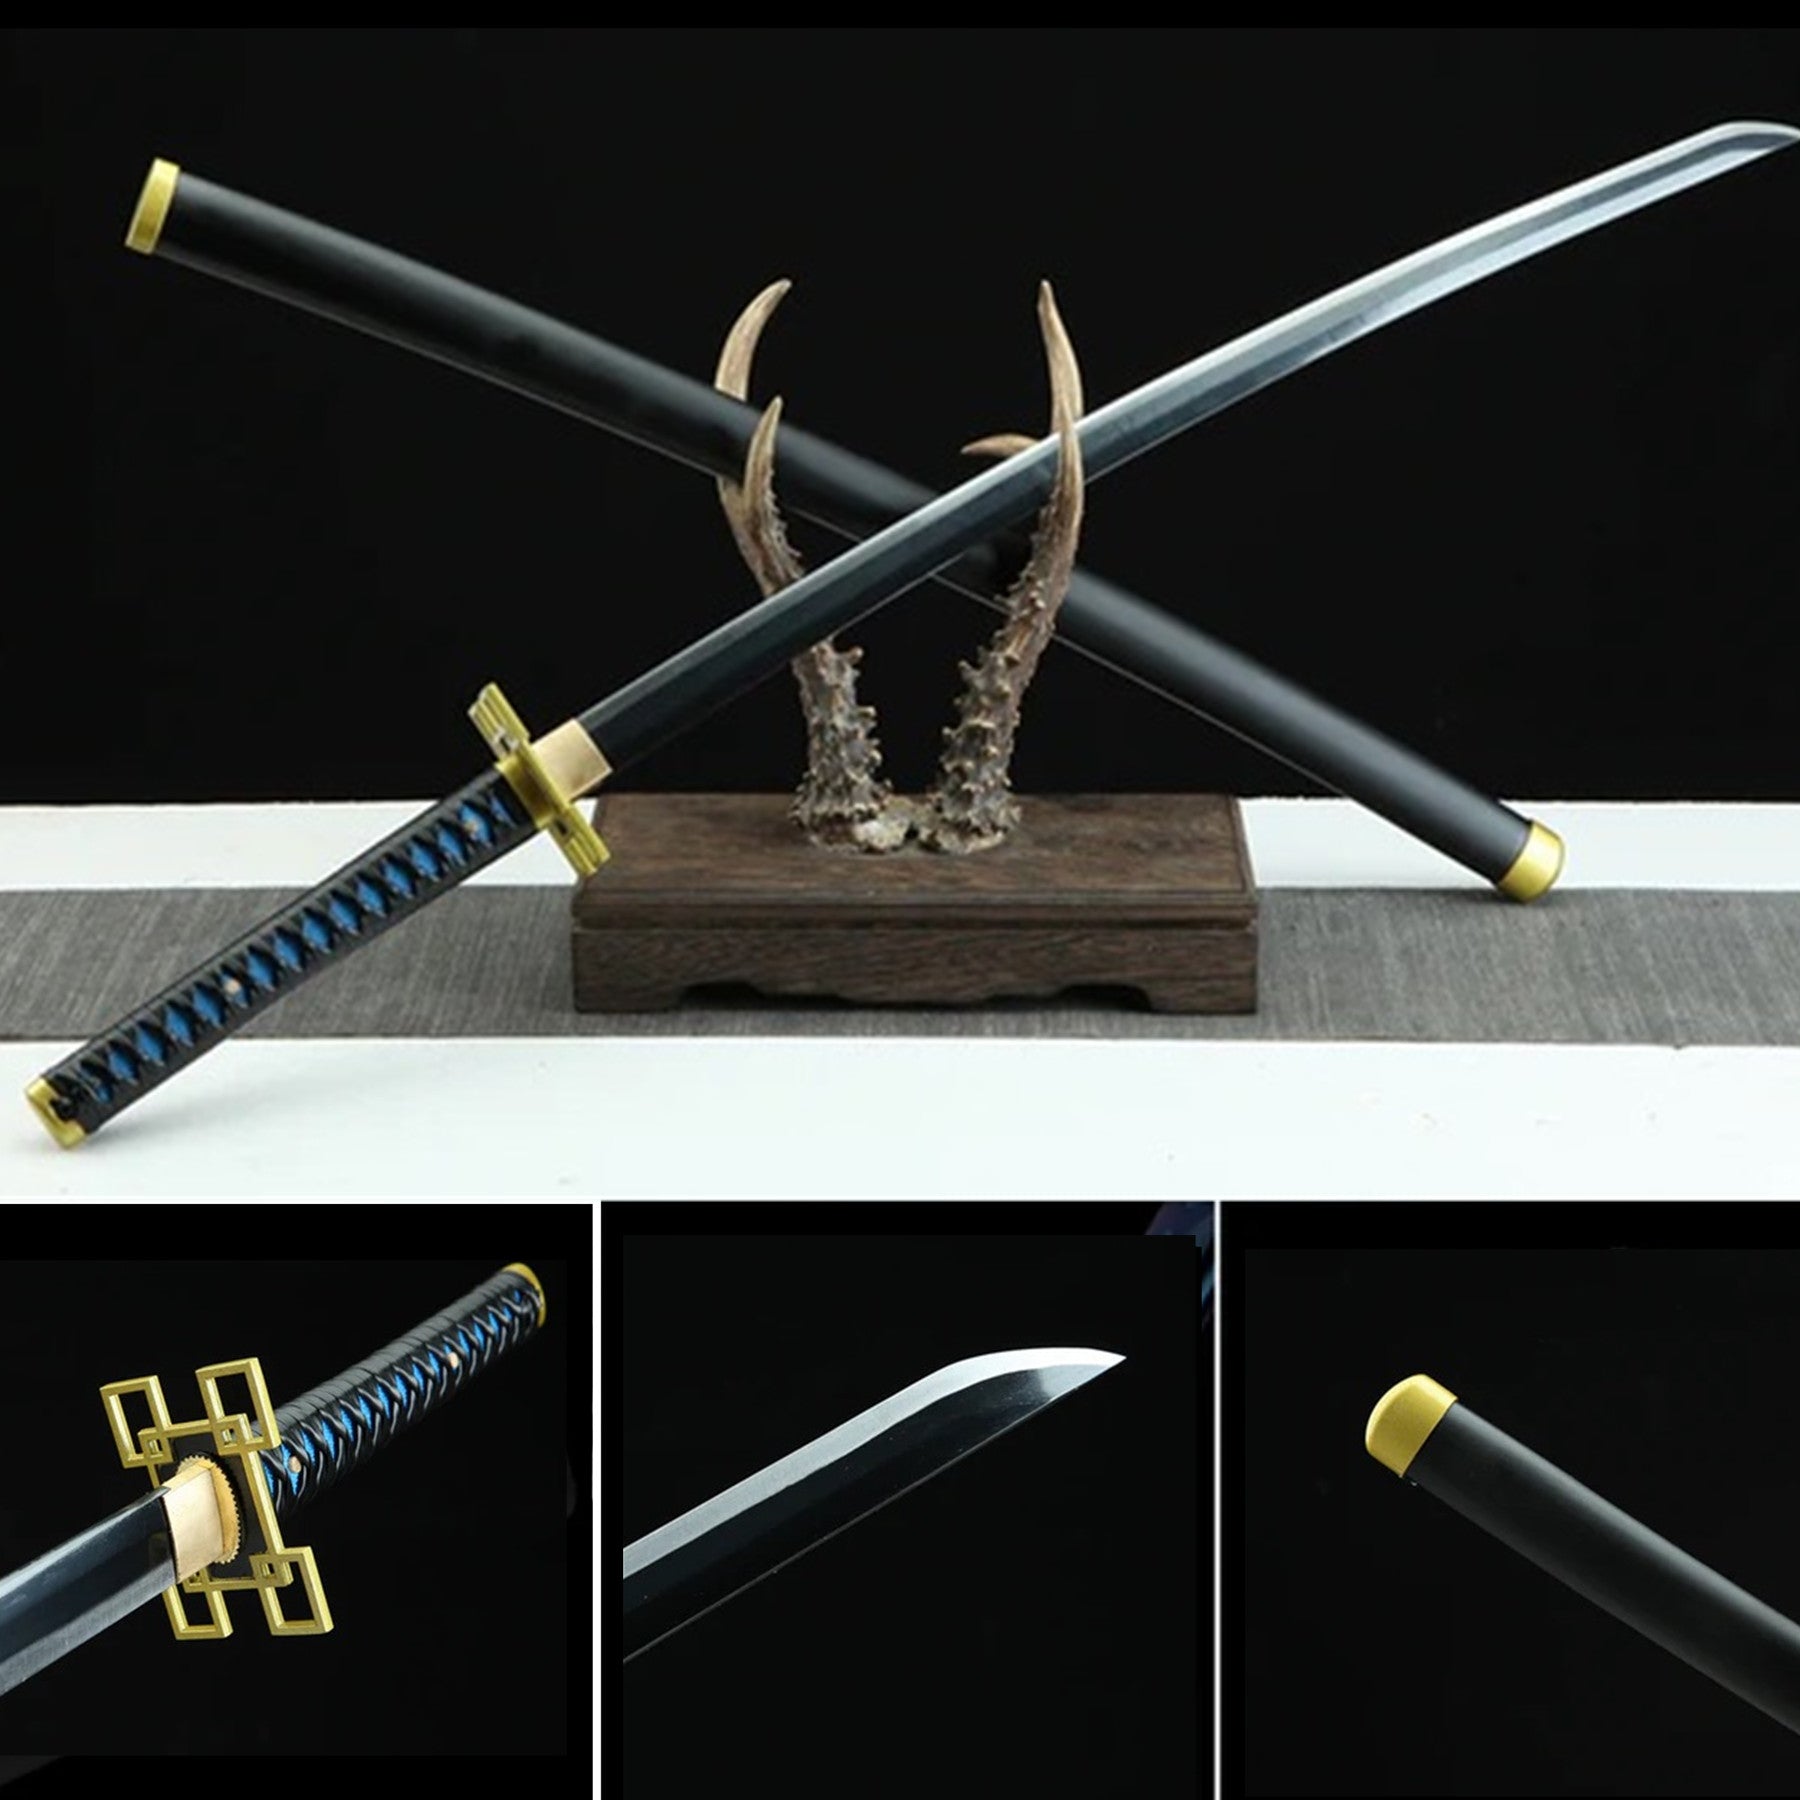 MUICHIRO TOKITO KATANA SWORD (CARBON STEEL 1060)